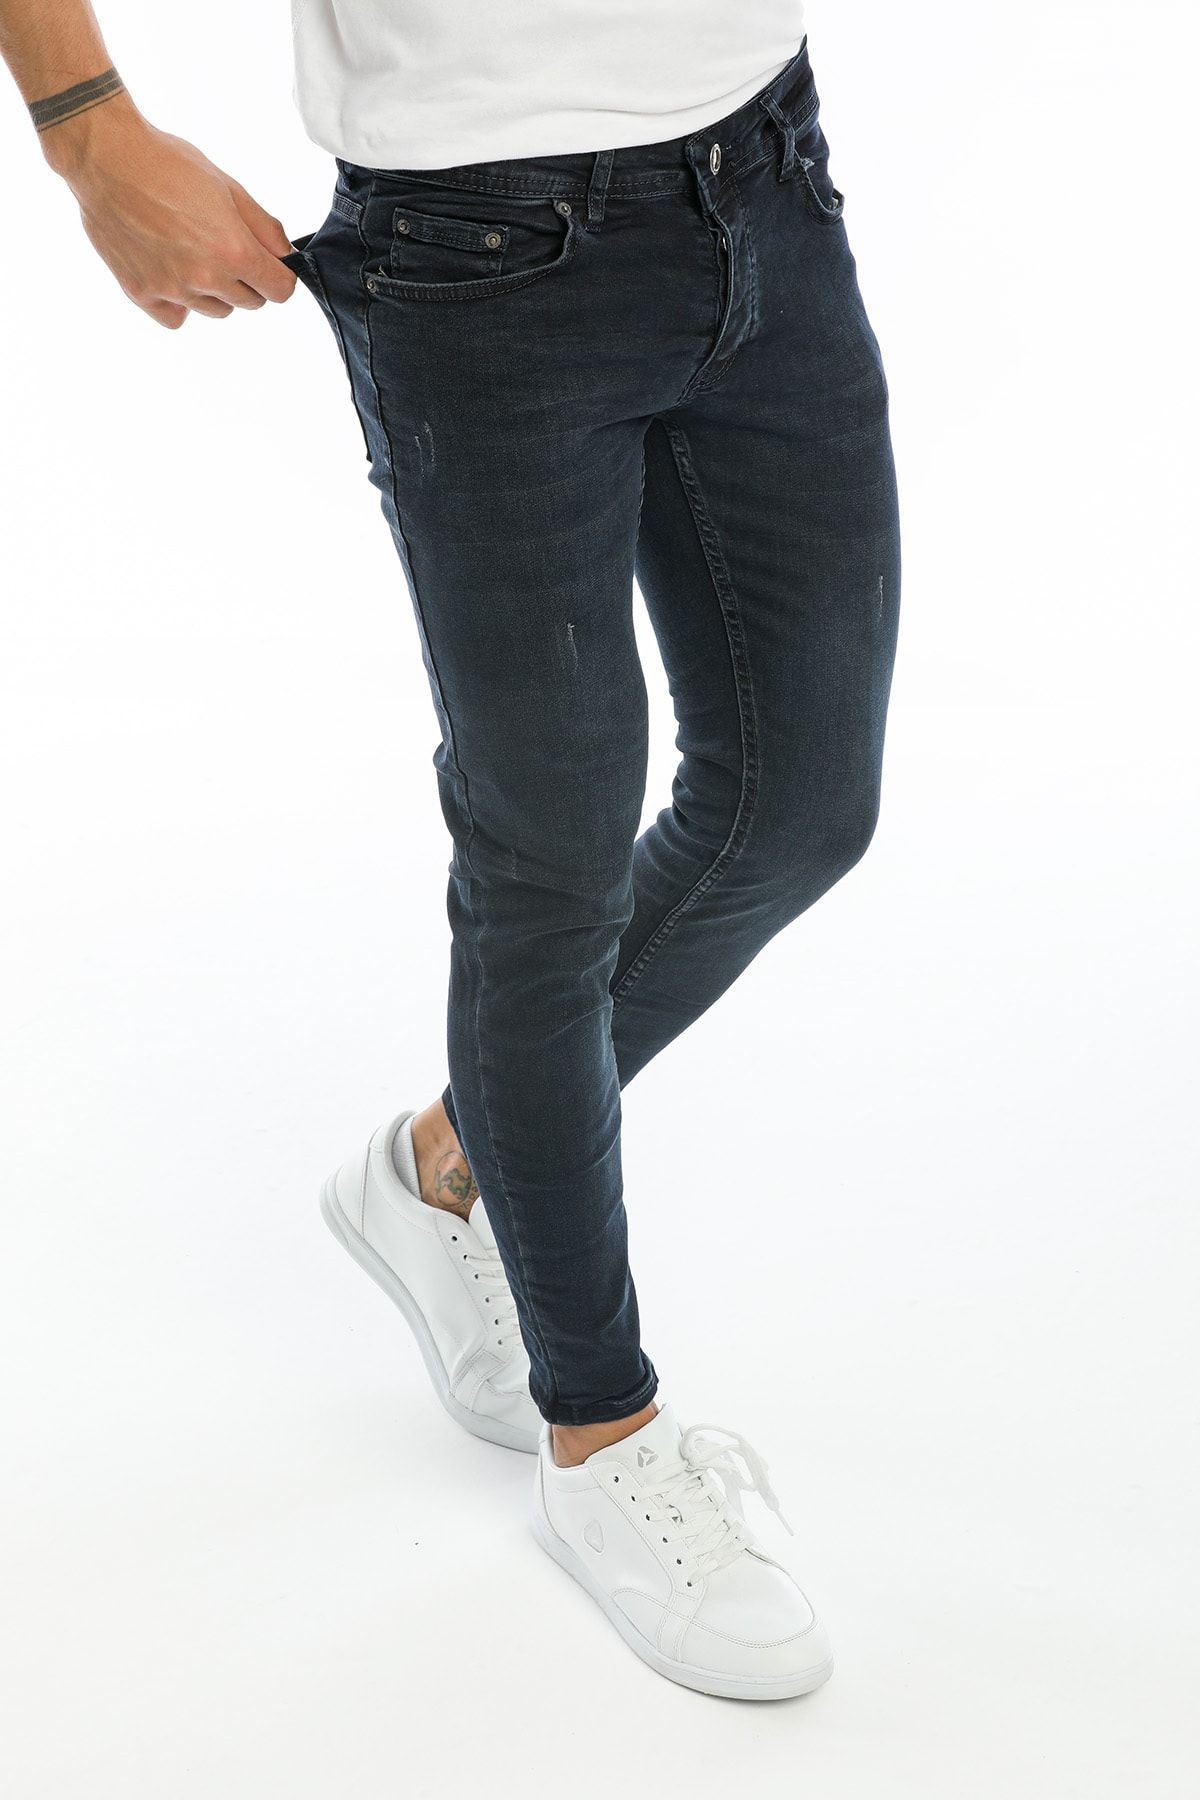 Dr Dnm Remix Erkek Jeans Skinny Fit Likralı Black Tırnaklı